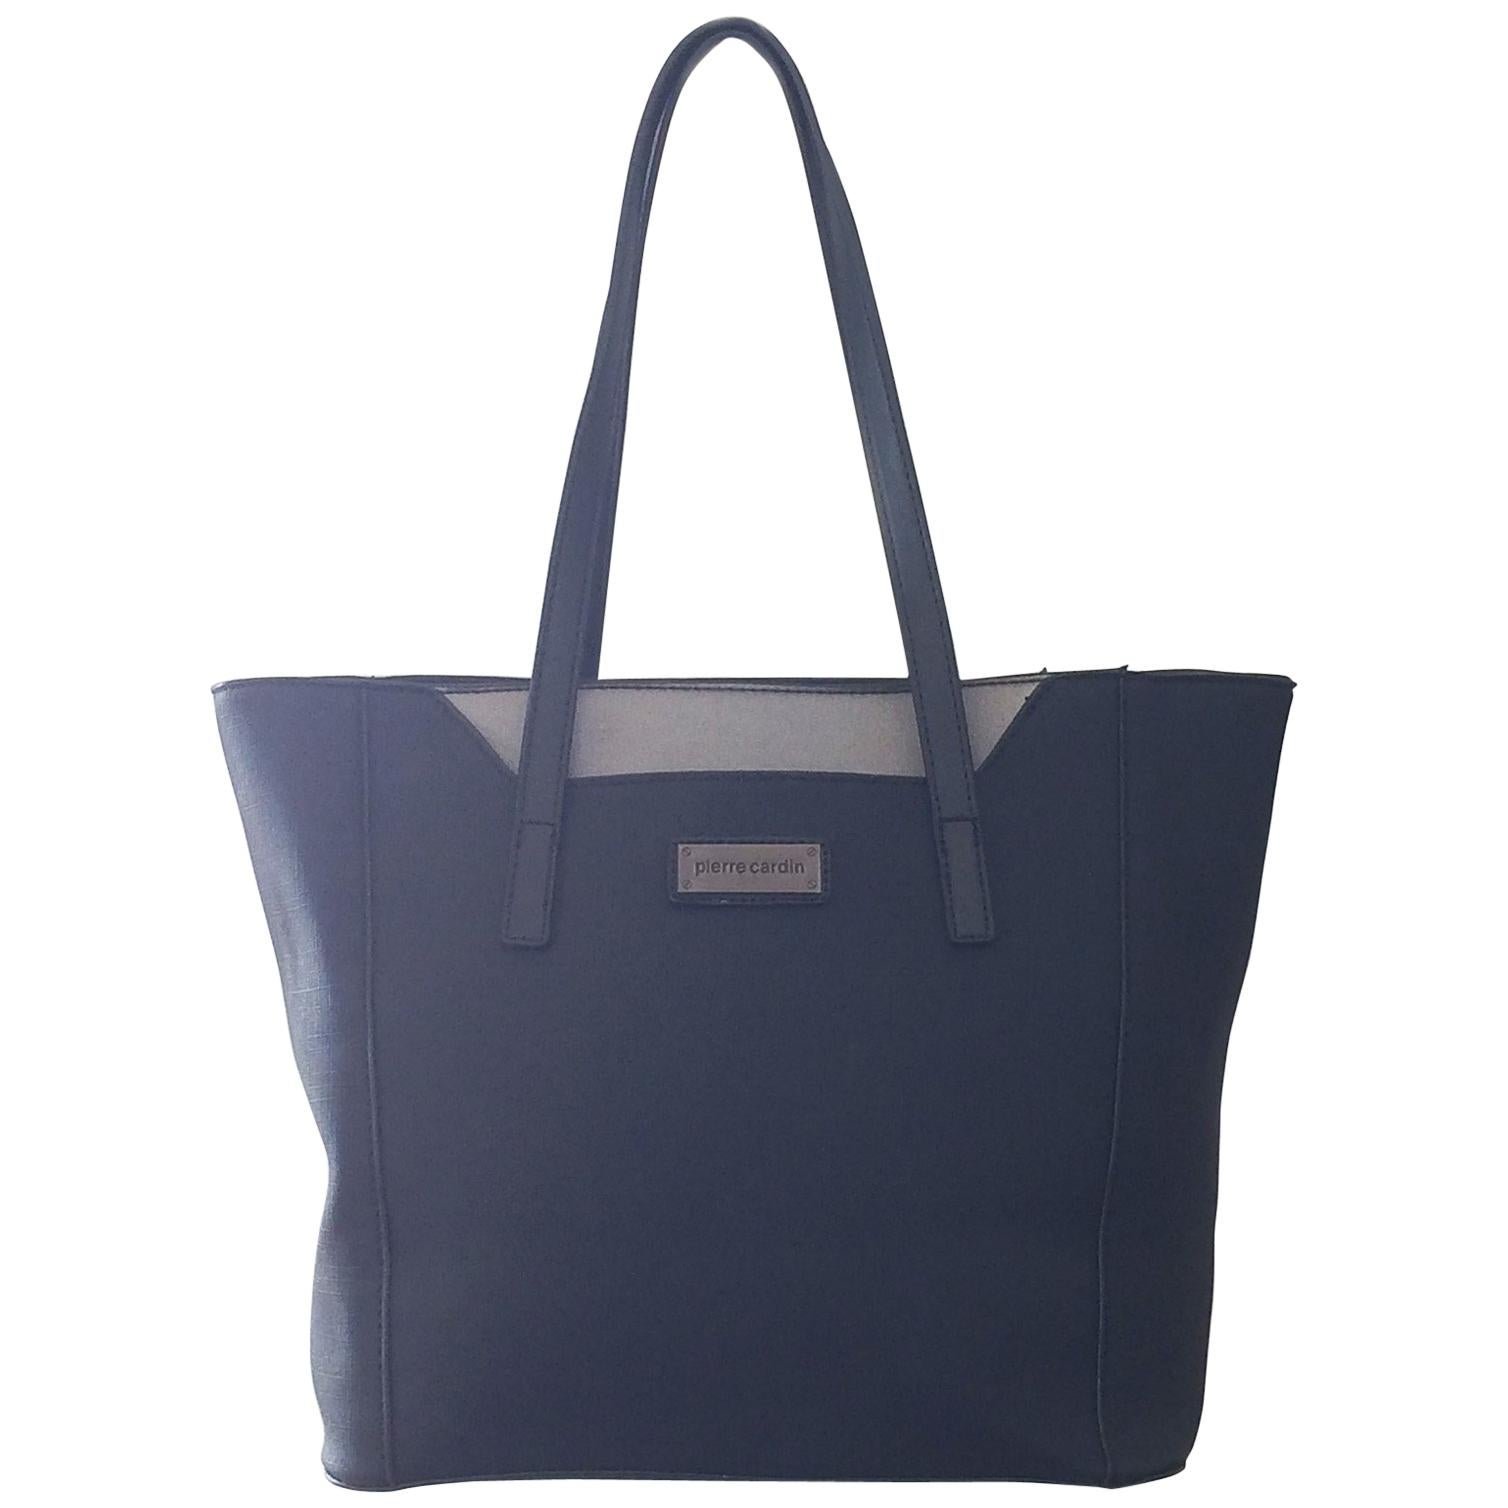 Pierre Cardin Linen Textured black handbag bag tote For Sale